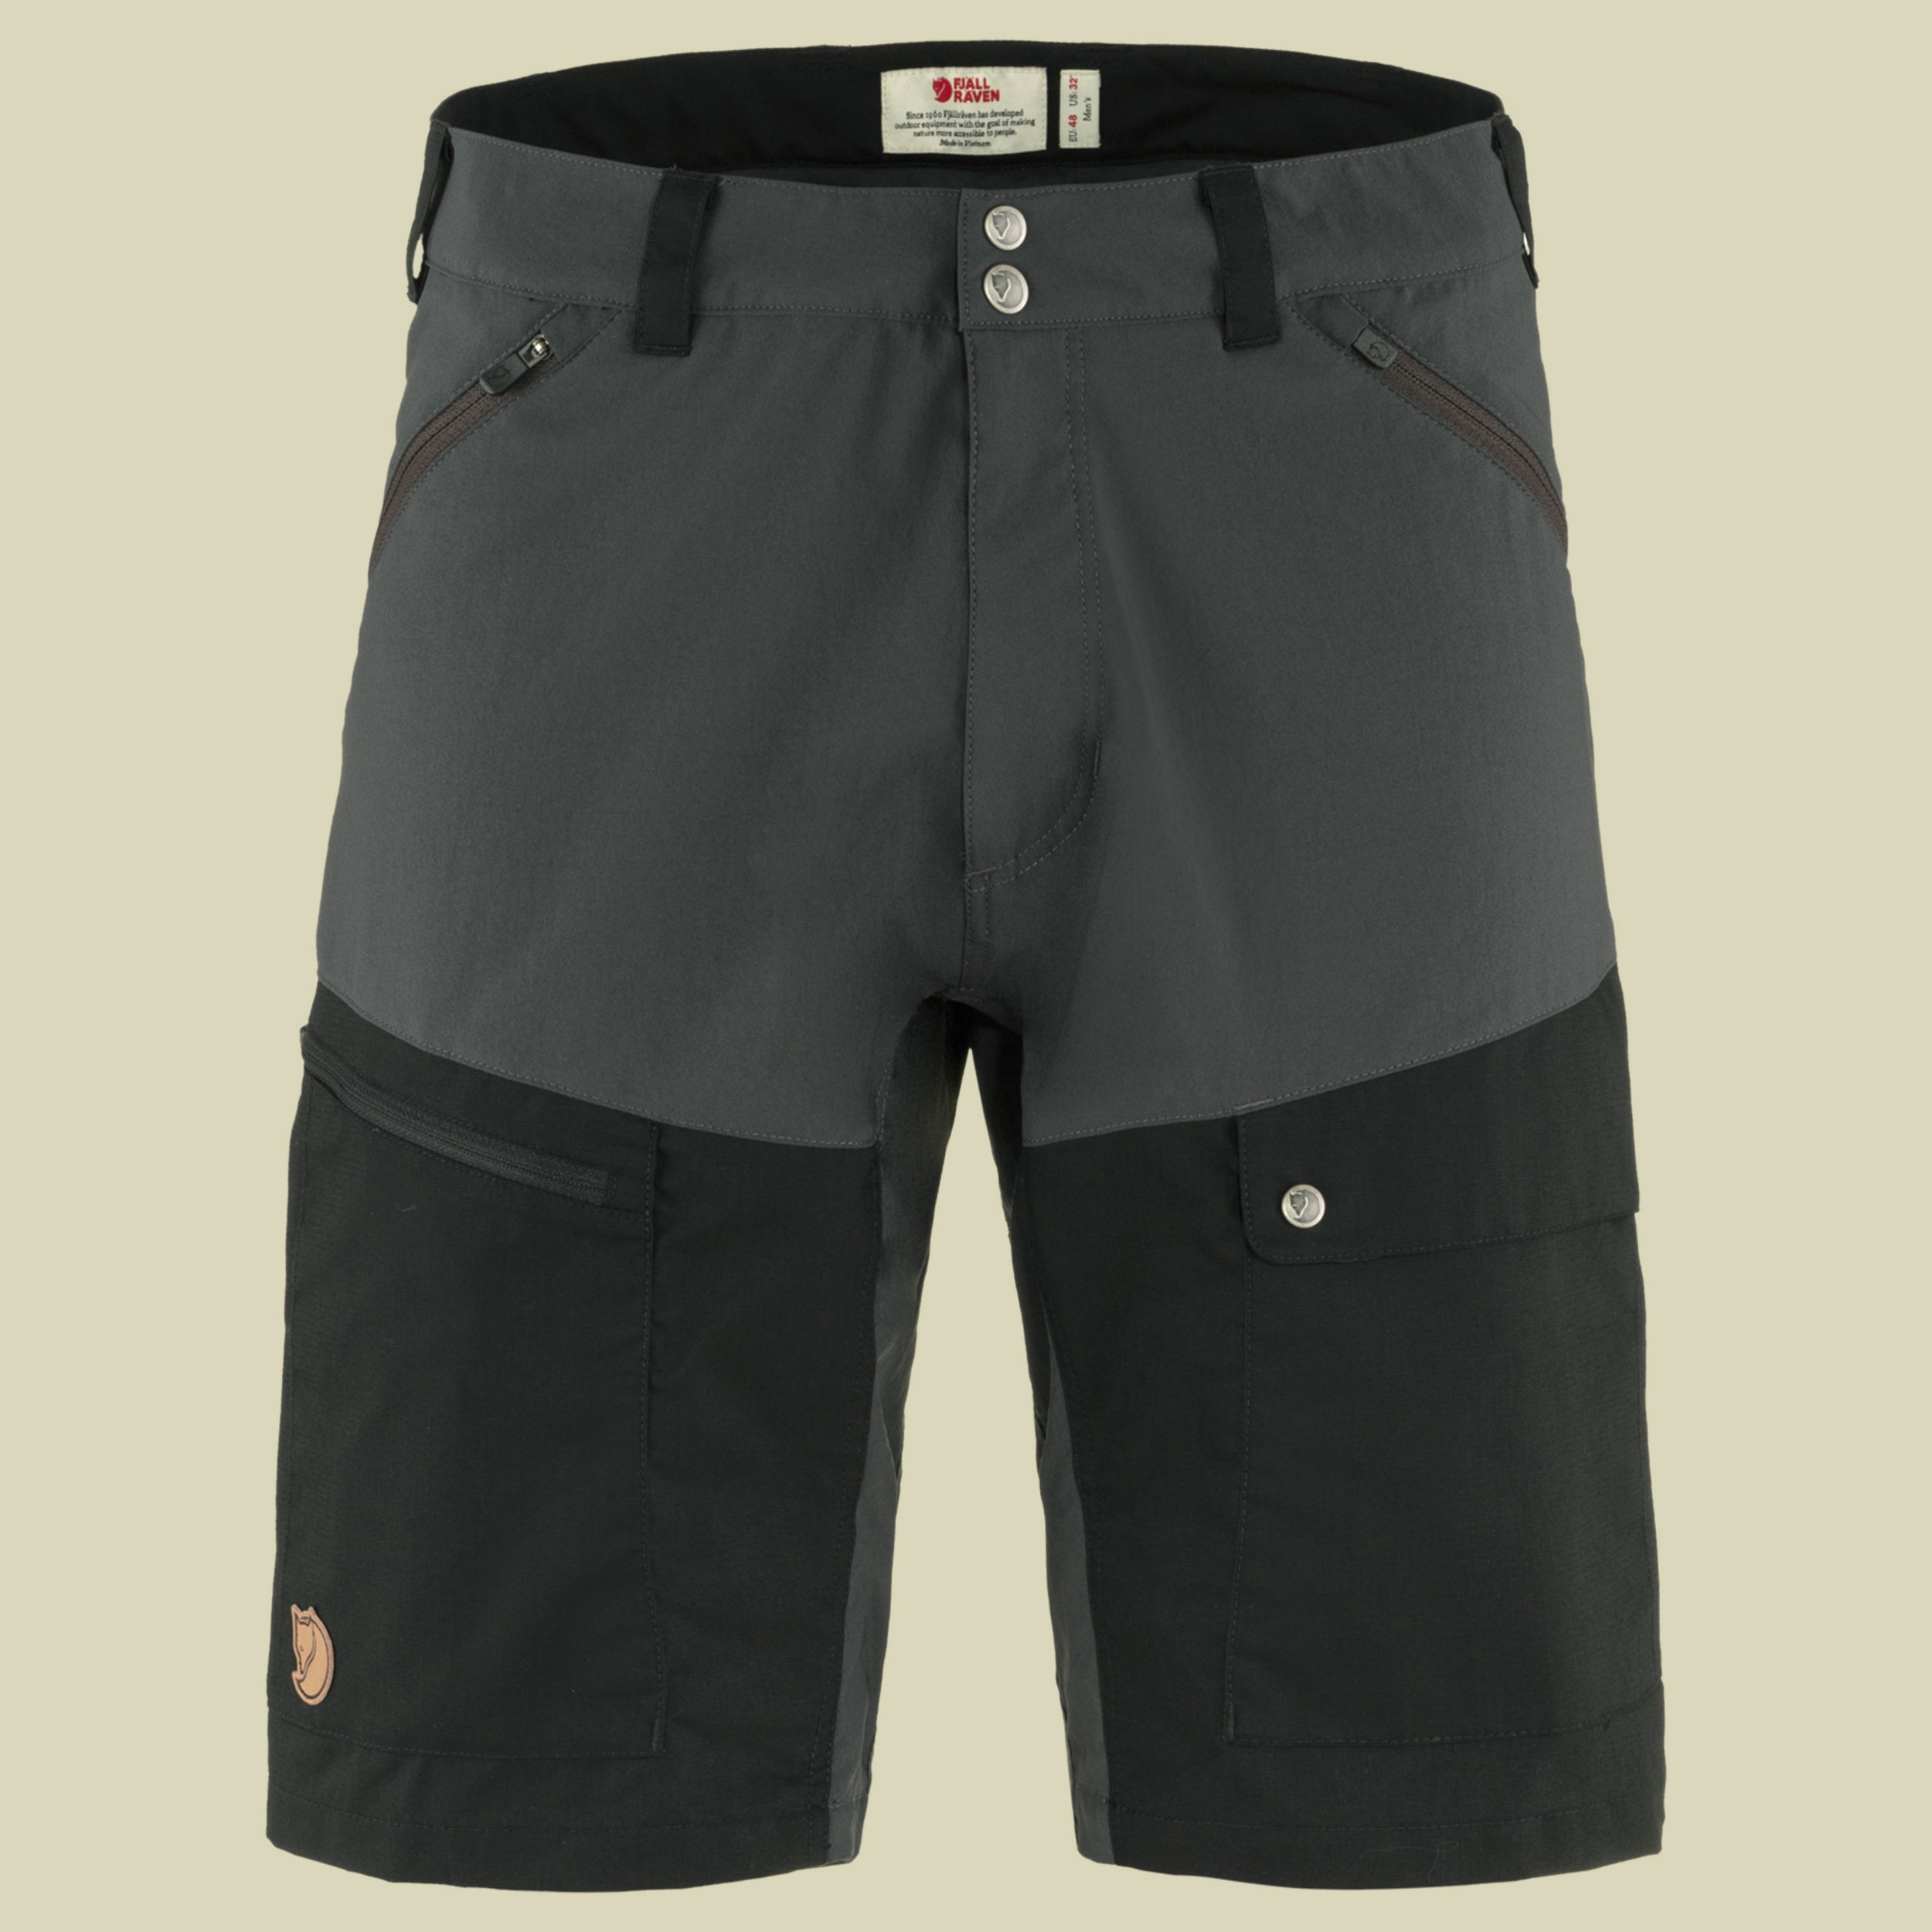 Abisko Midsummer Shorts Men Größe 46 Farbe dark grey/black